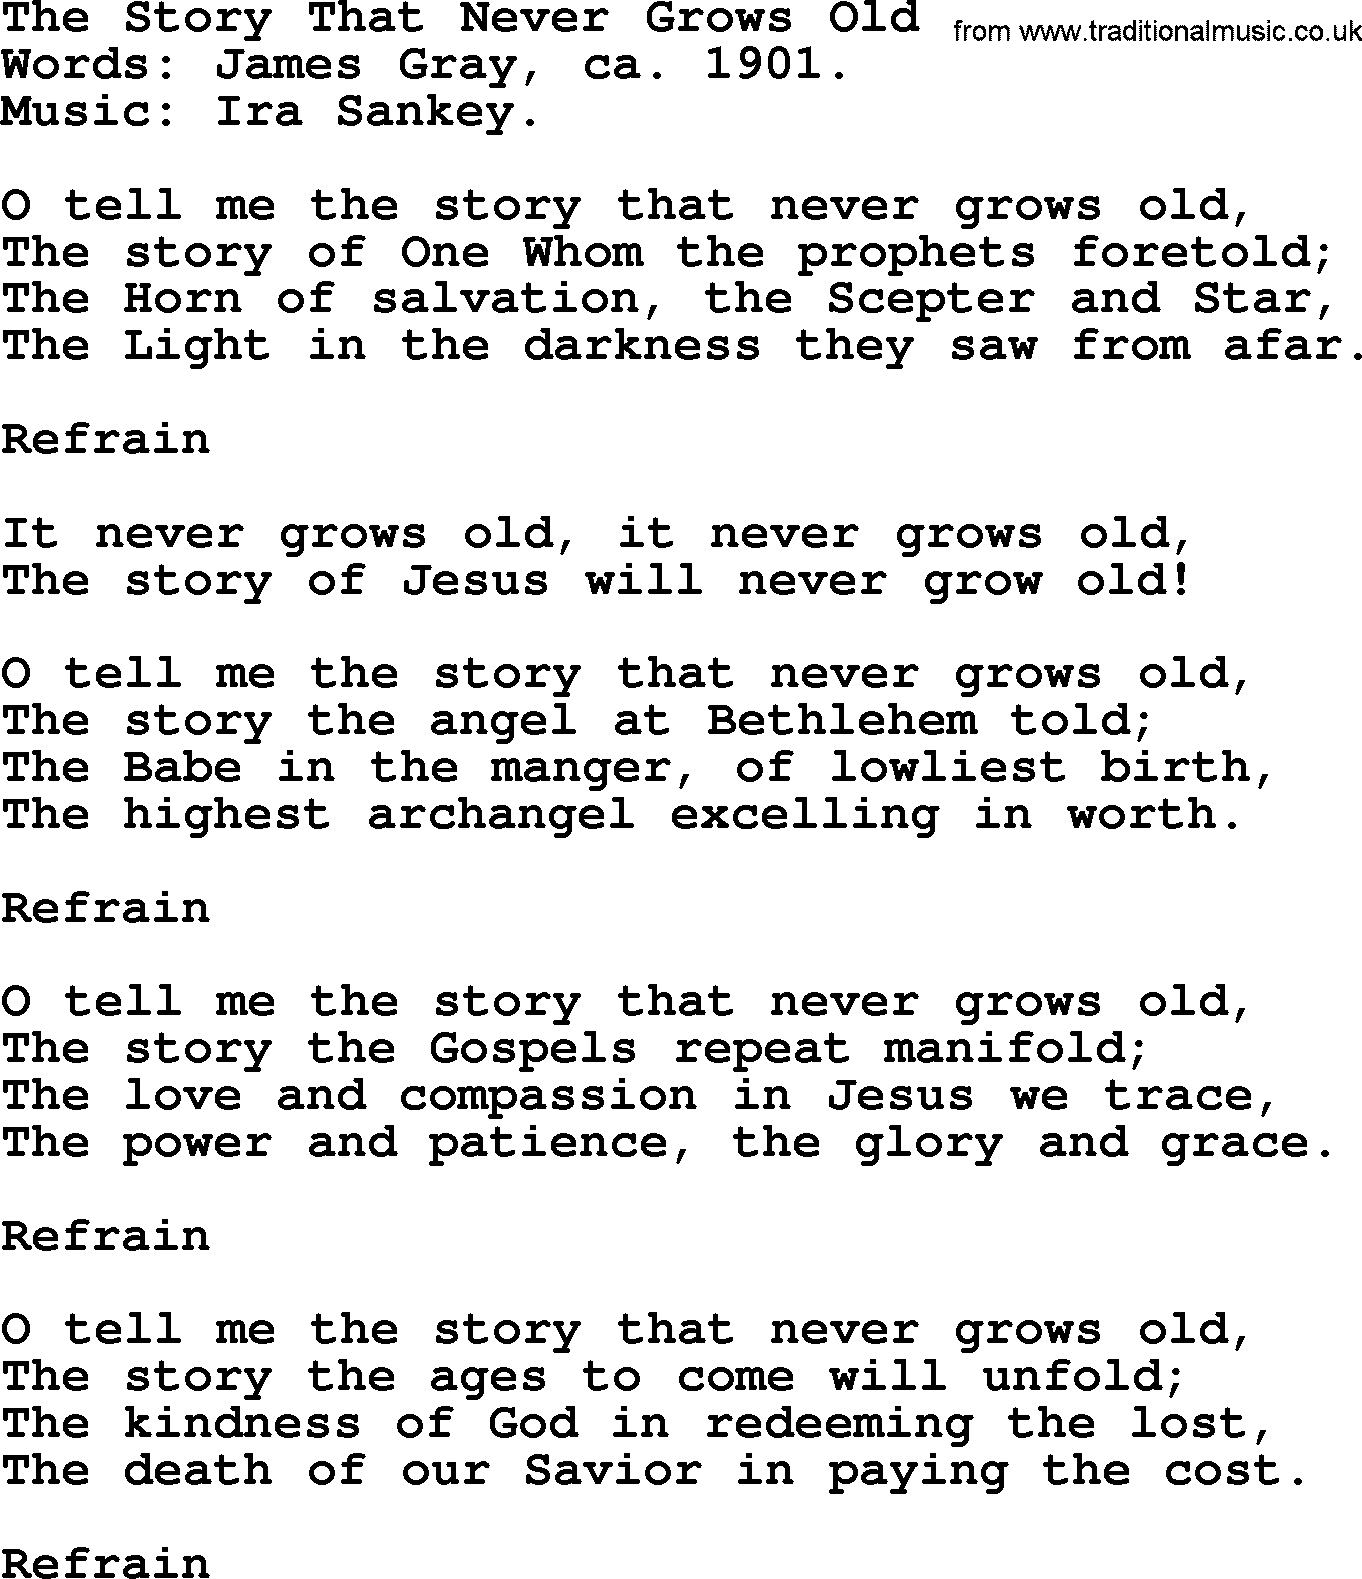 Ira Sankey hymn: The Story That Never Grows Old-Ira Sankey, lyrics